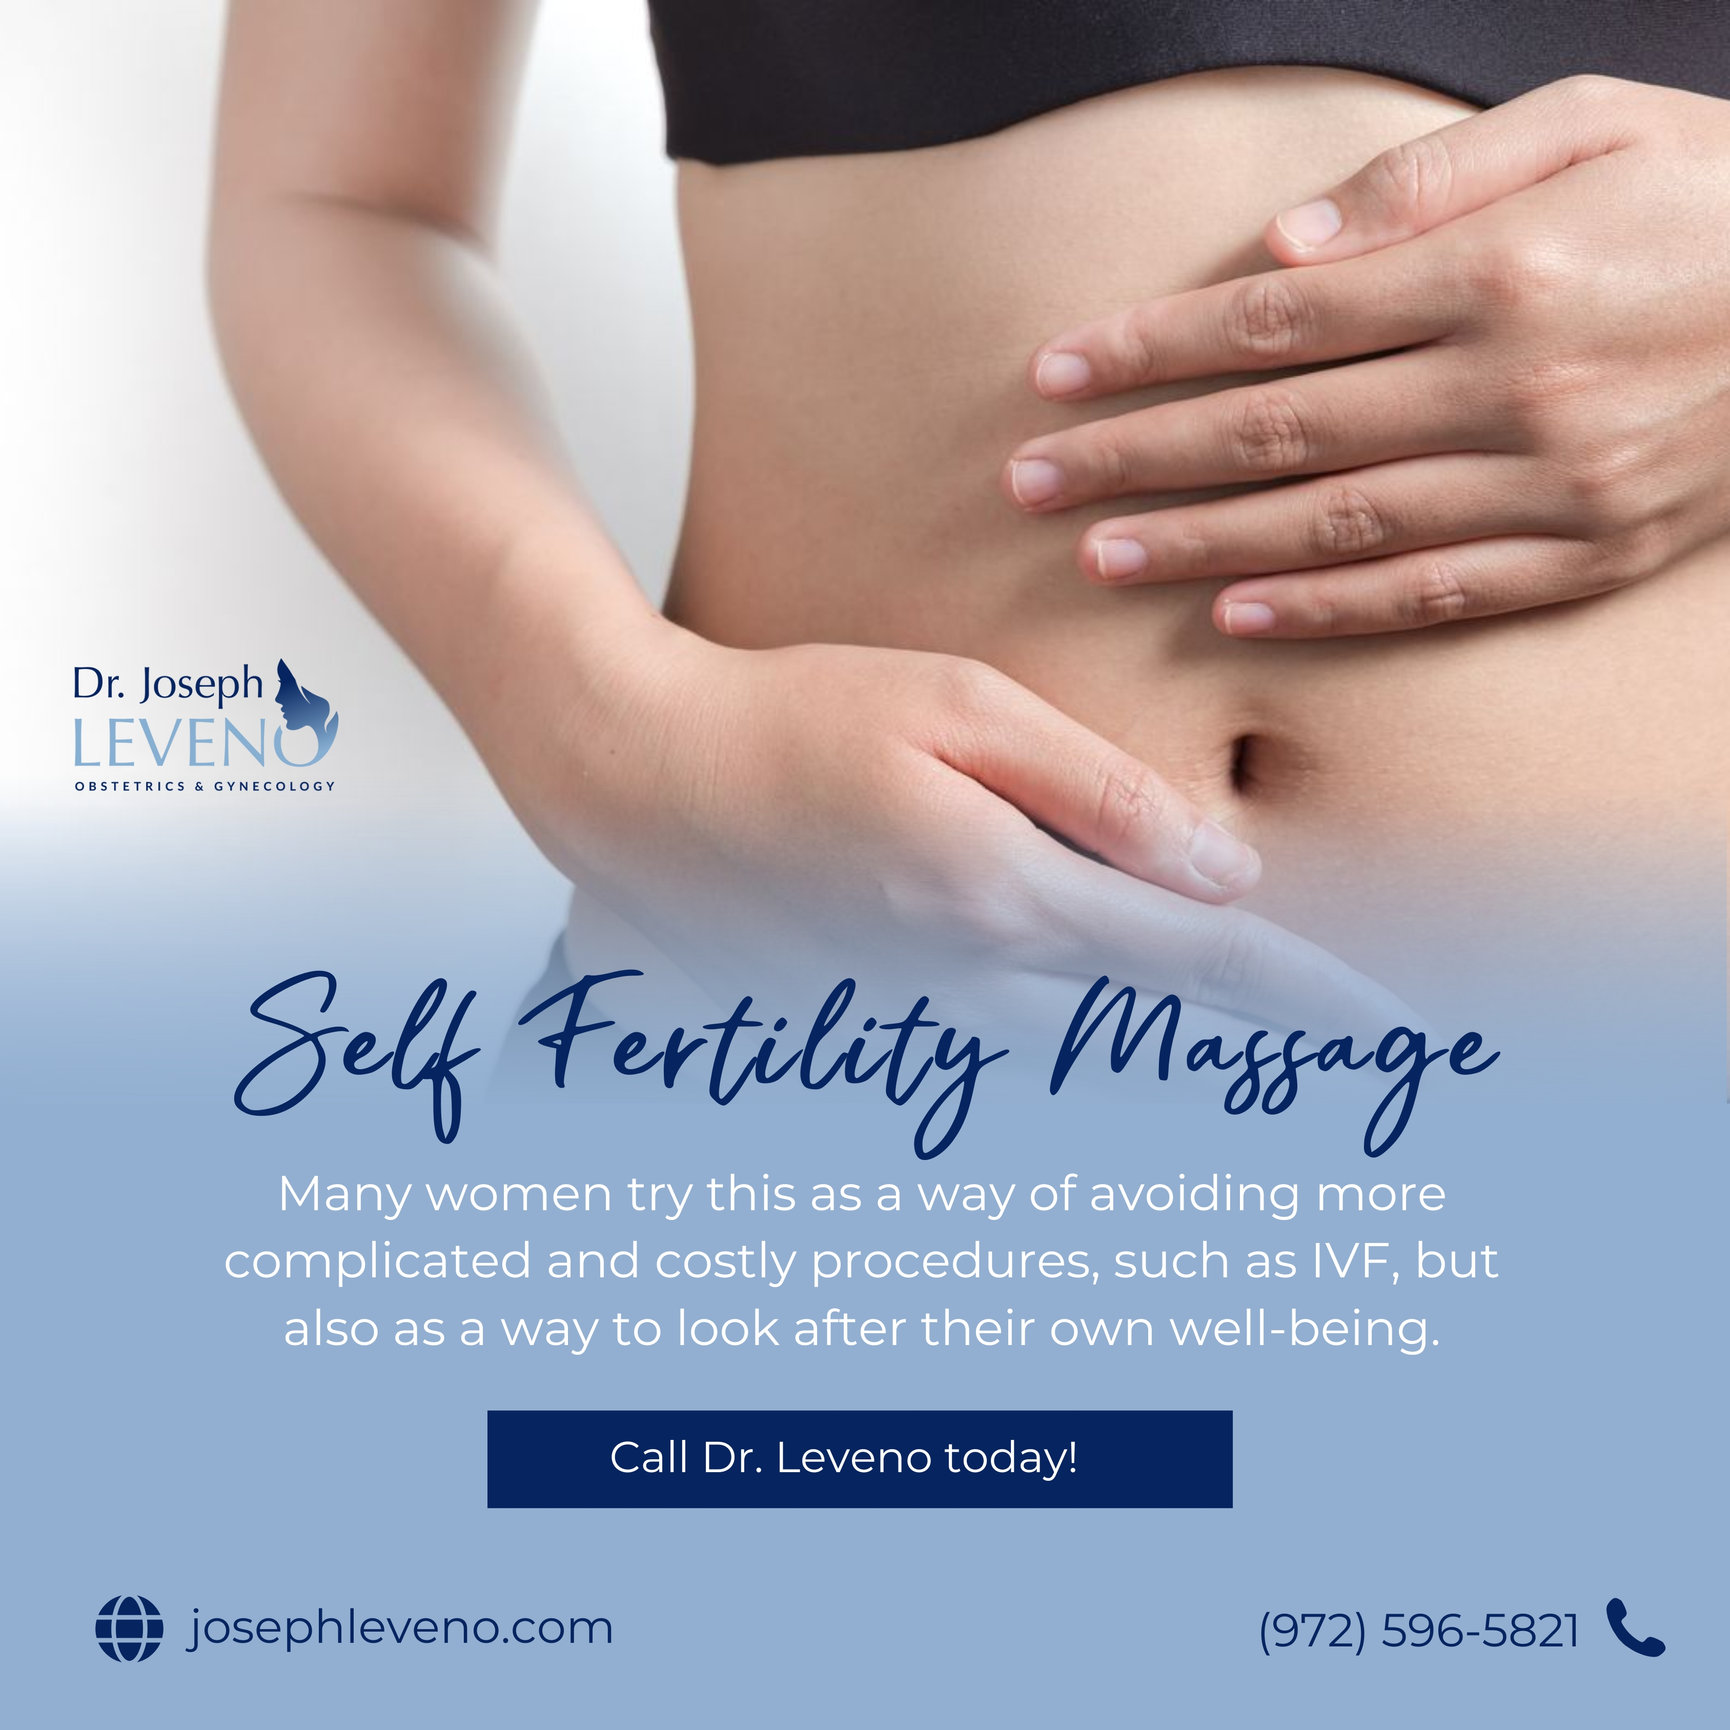 What Are The Benefits Of The Self Fertility Massage Dr Joseph Leveno